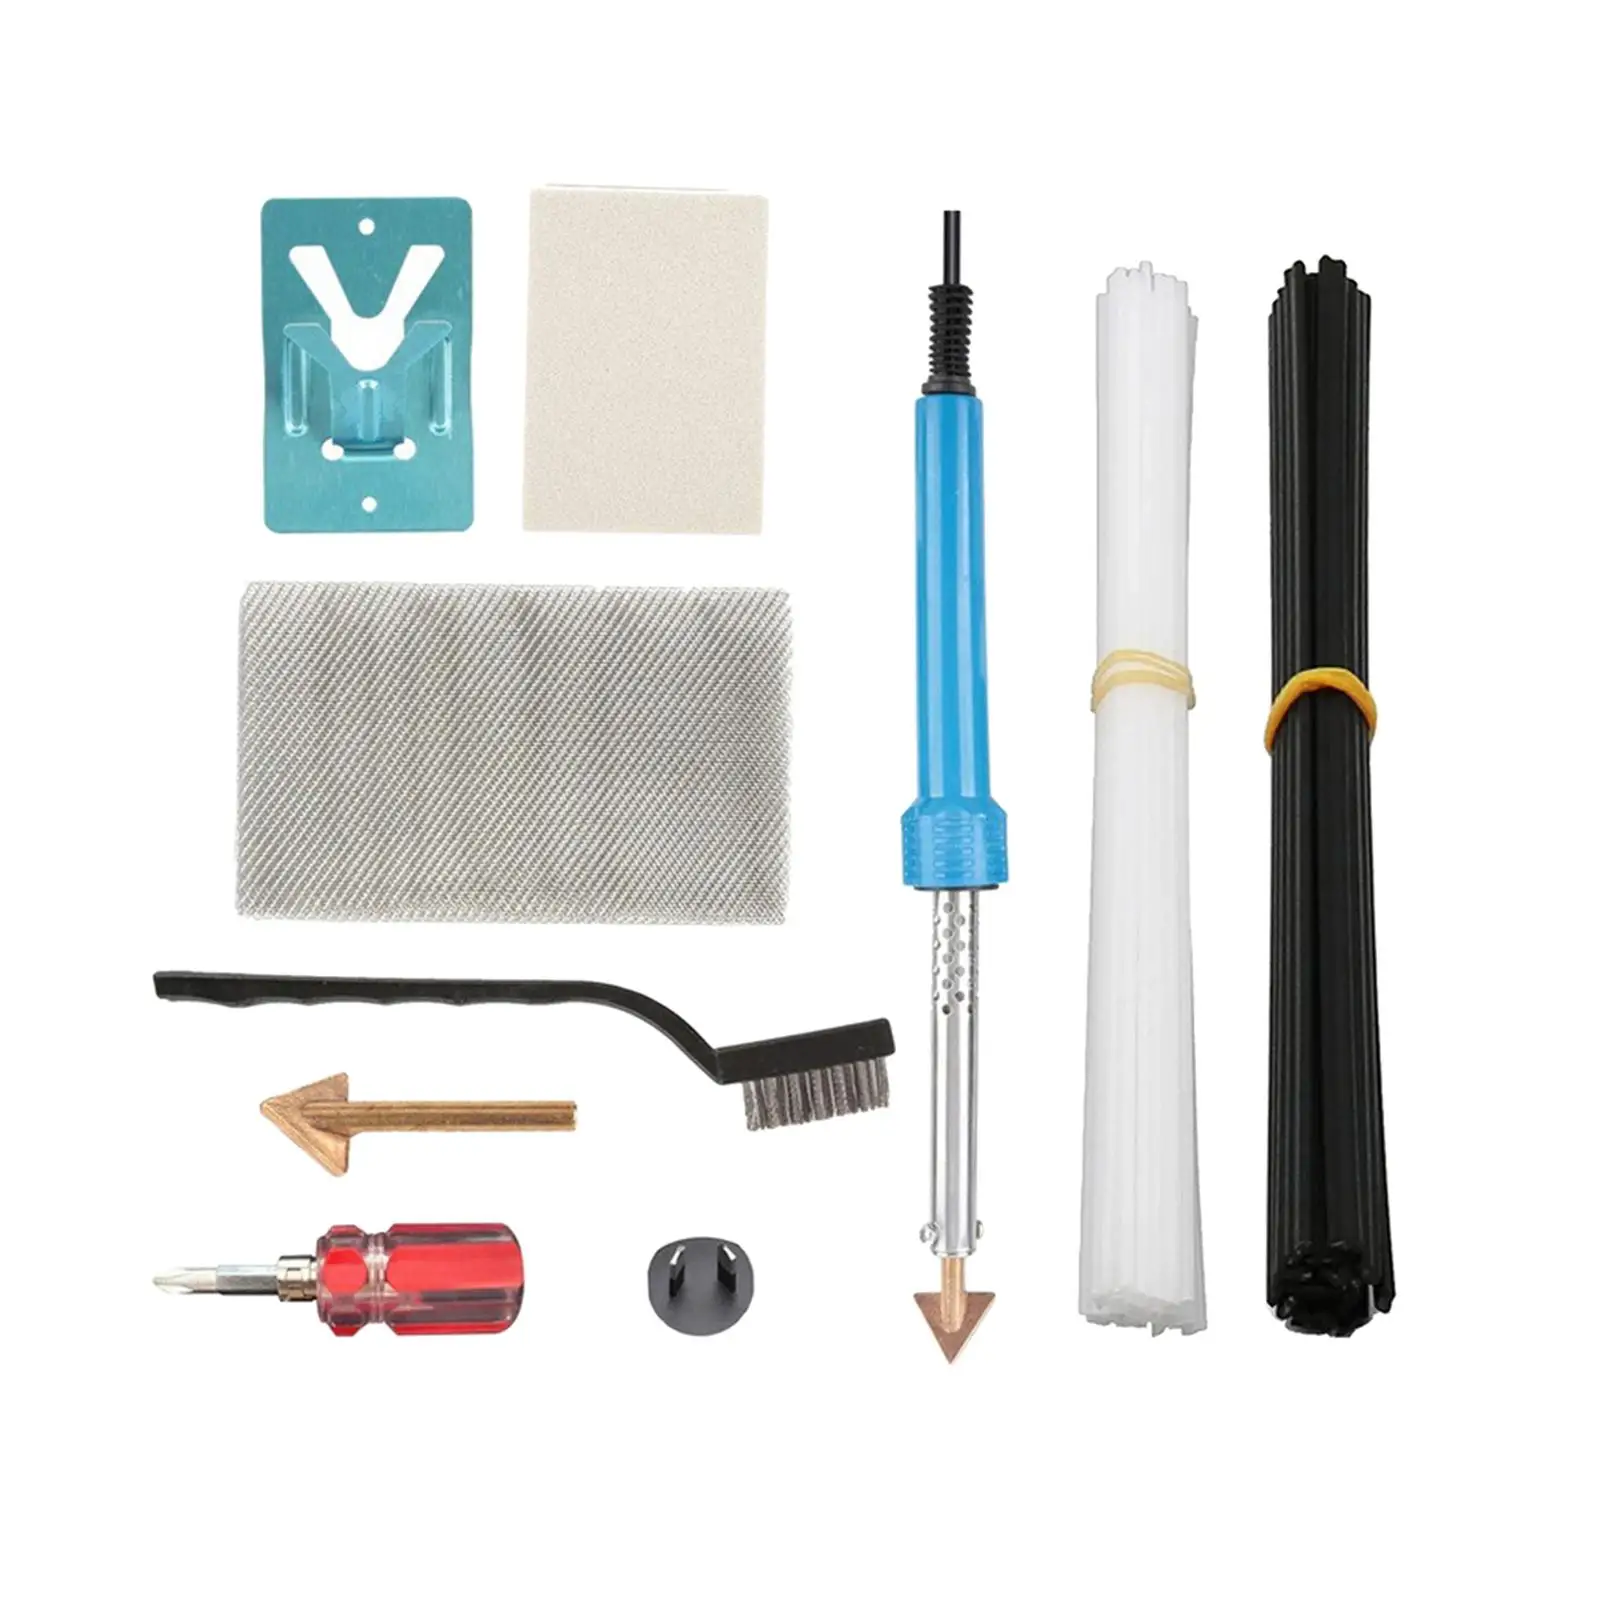 Plastic Welding Kit Surface Quick Heating Portable 2 Sandpaper 1 Metal Mesh Professional 80W Welder Tools for Kayak Arts